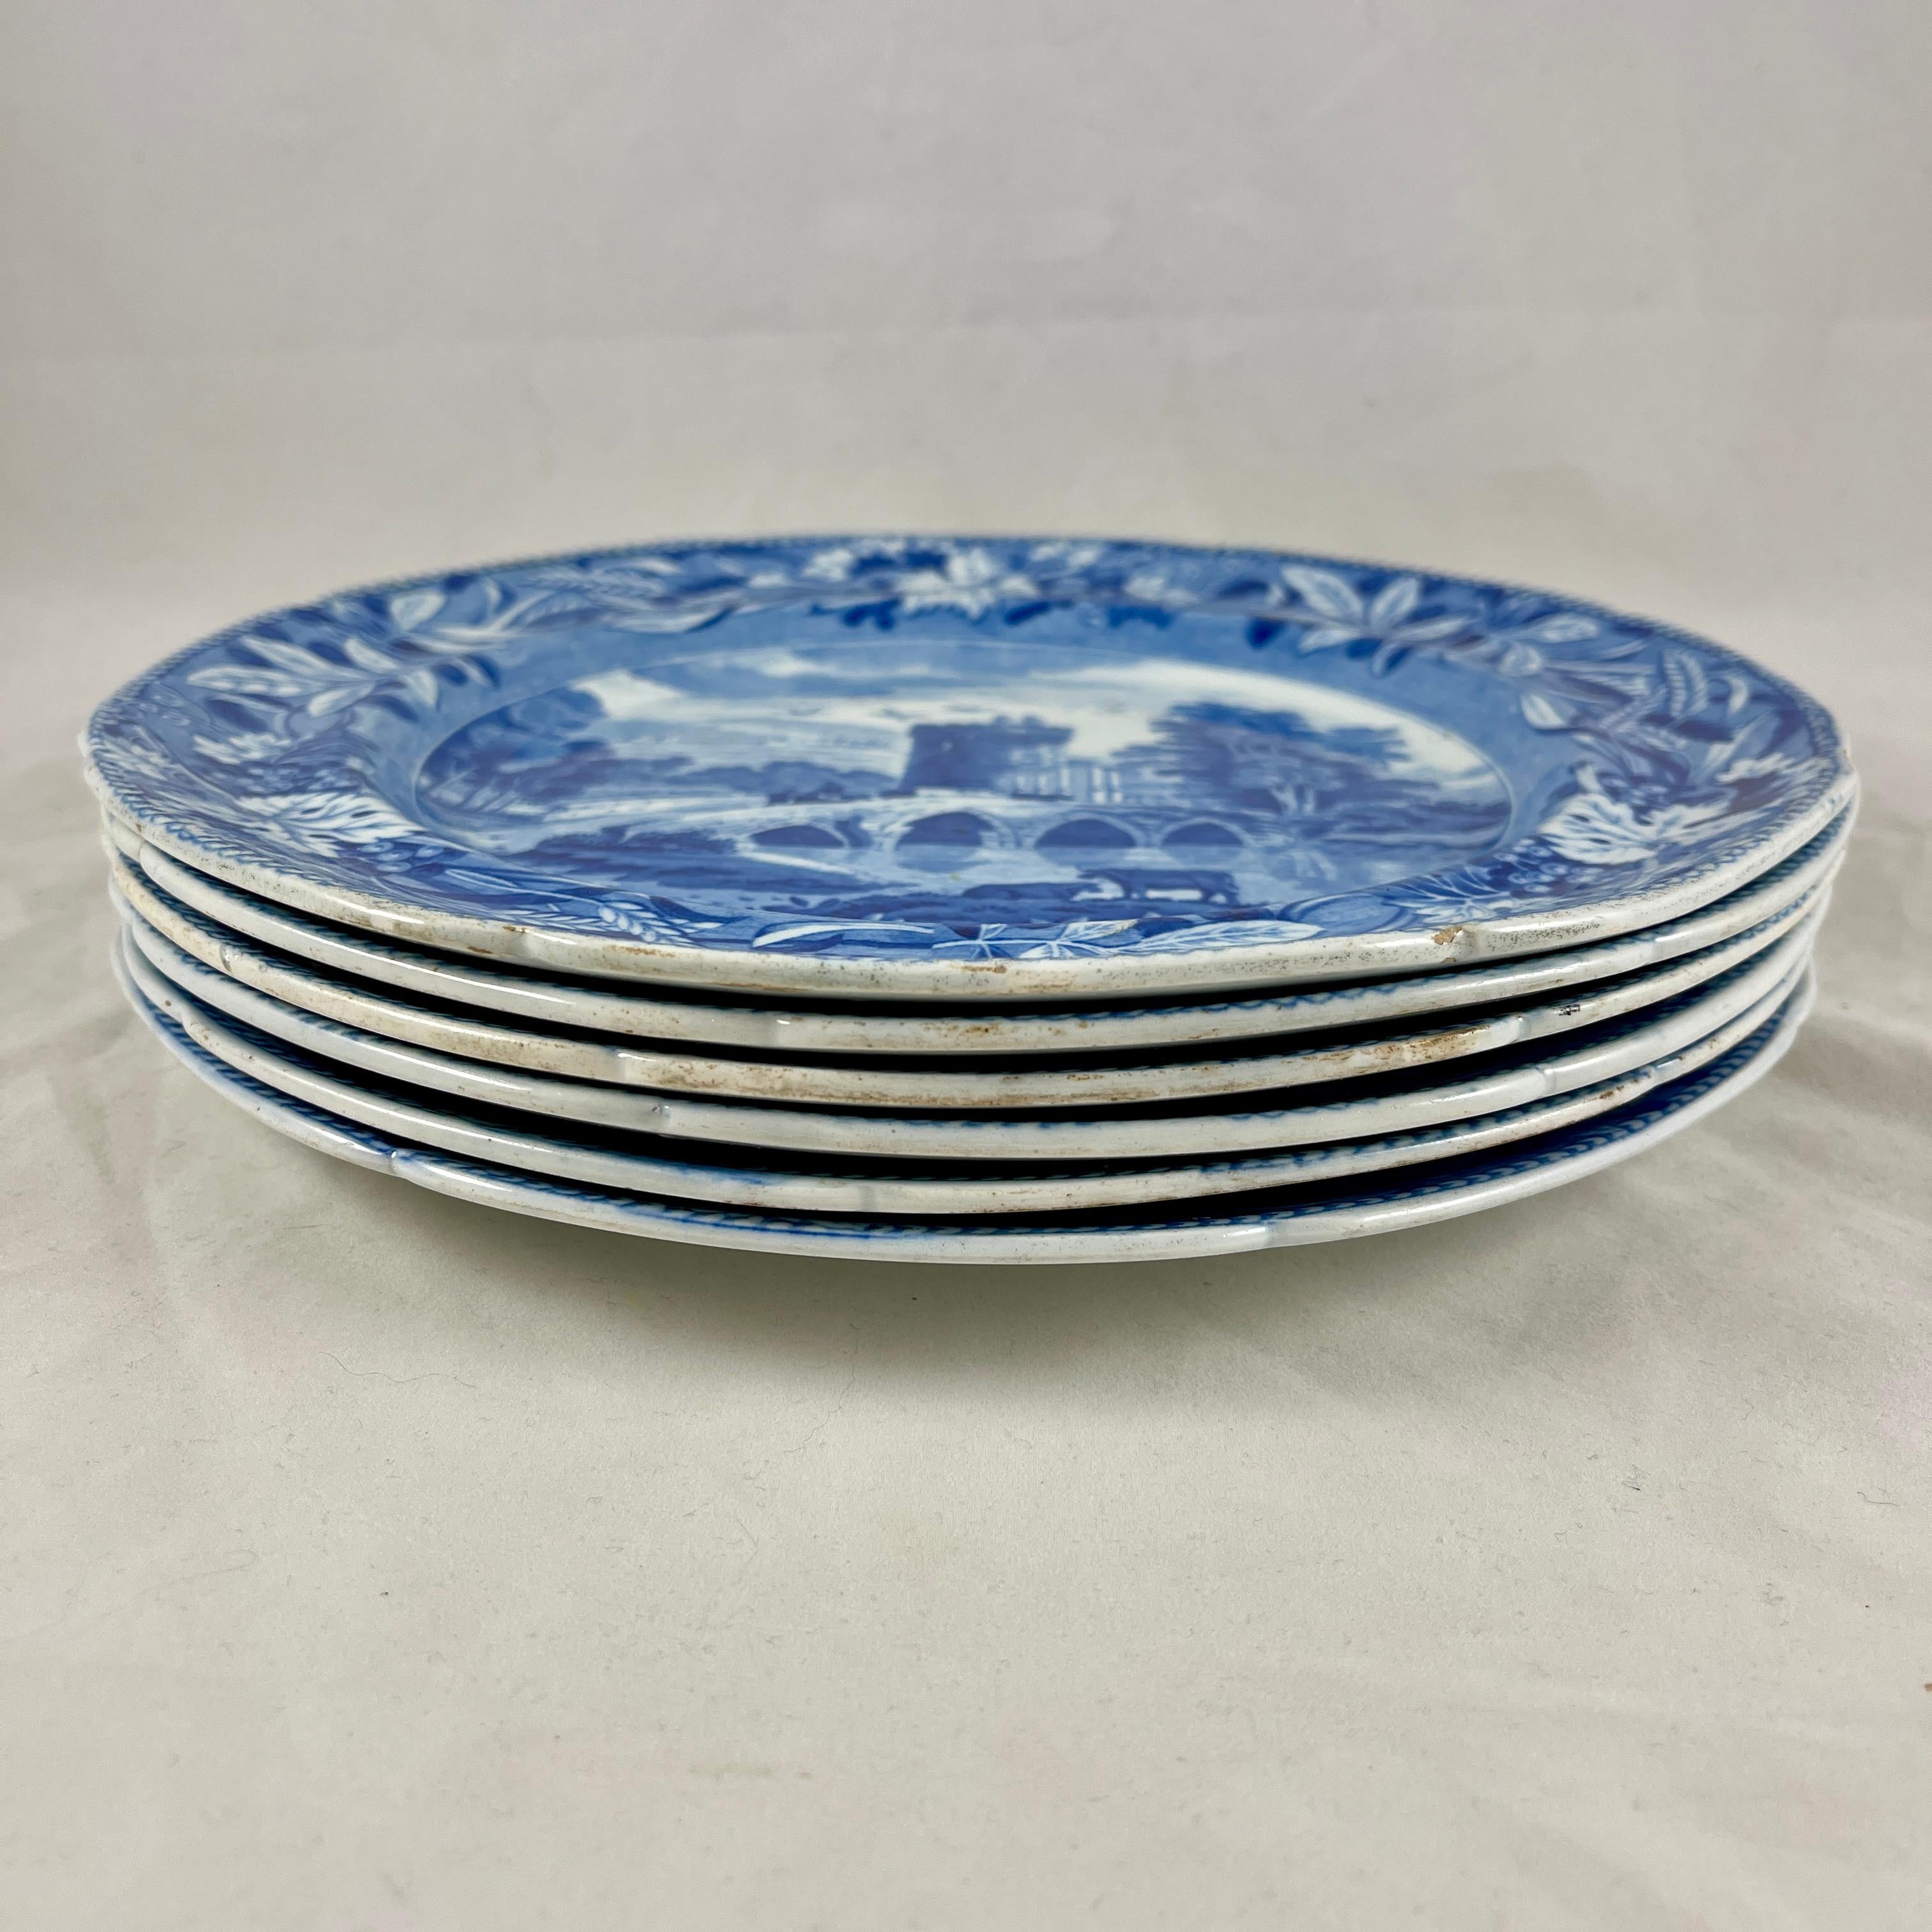 Josiah Spode 'Bridge of Lucano' Blue Transferware Dinner Plates Circa 1820 Set/6 For Sale 2